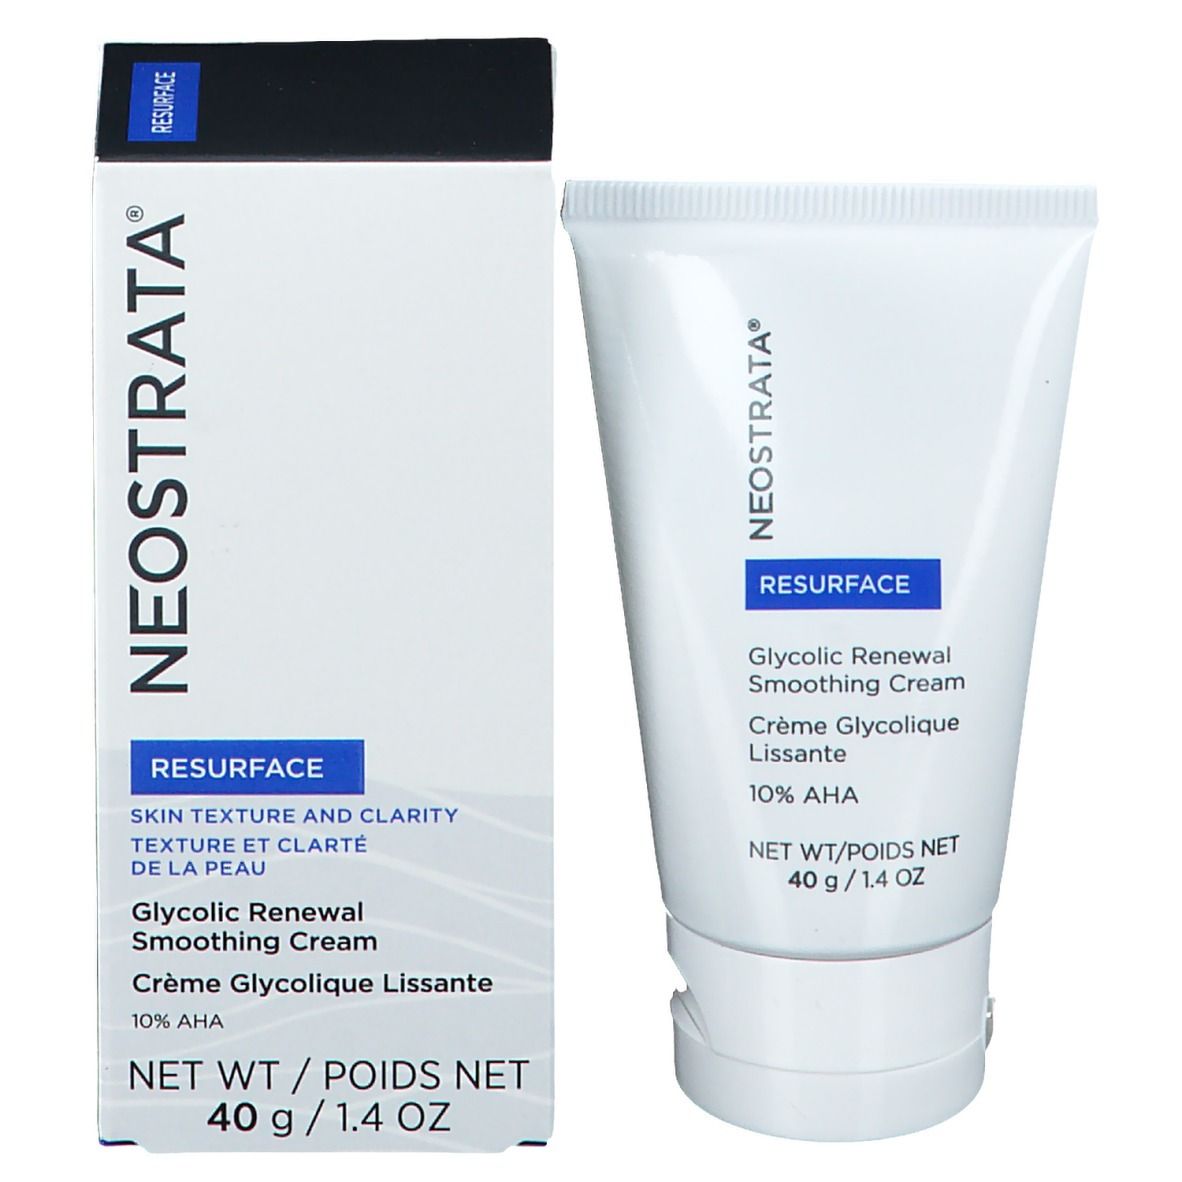 NeoStrata Ultra Smoothing Cream 10 AHA, Skinsmart